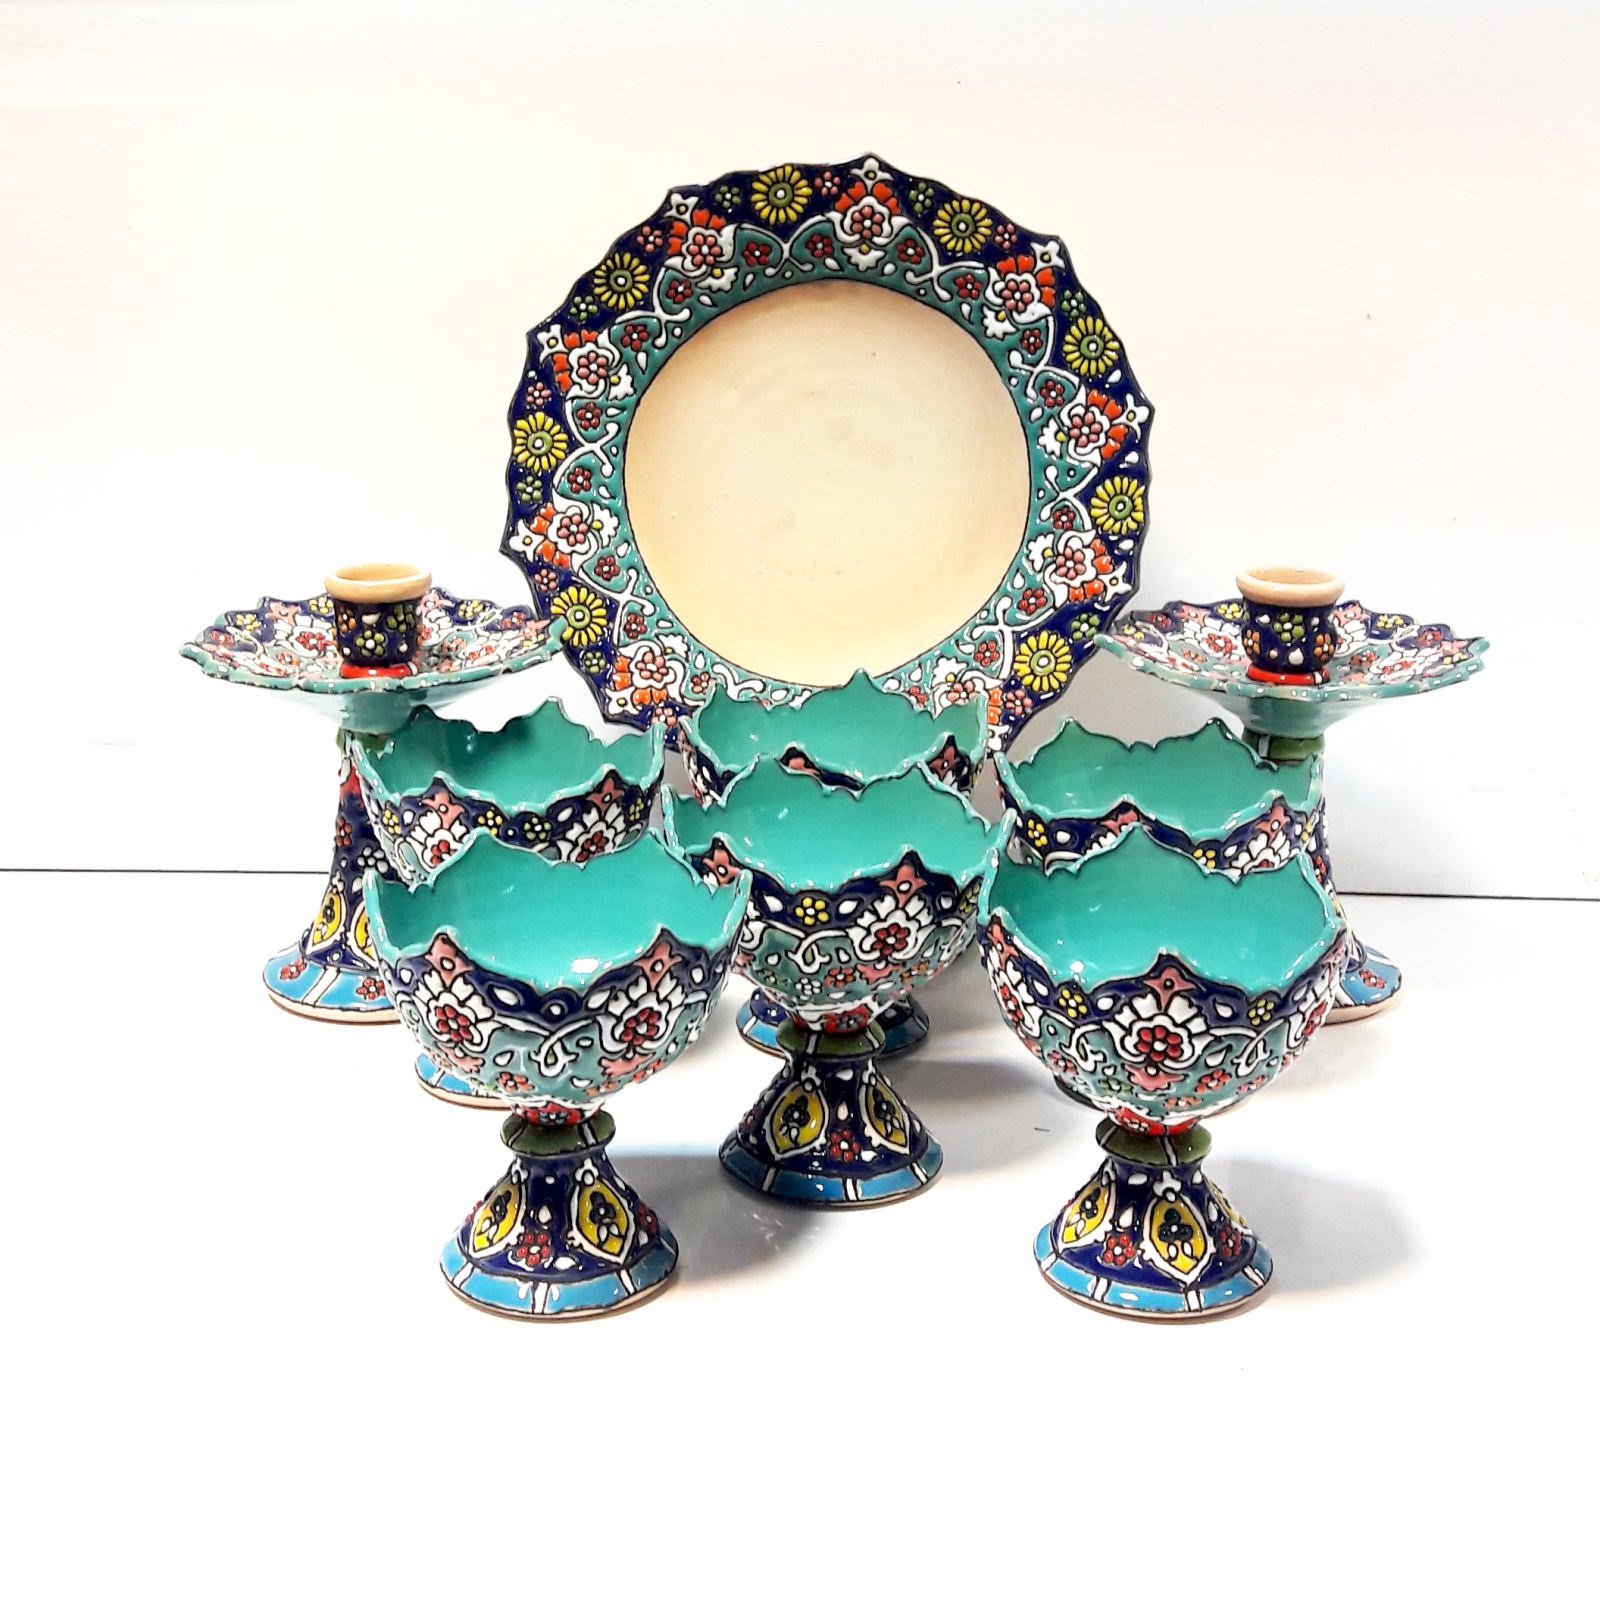 Enamel Handicraft pottery Candlestick and mirror and bowl code 9009 collection 9 pcs,émail, plats en émail, artisanat émail